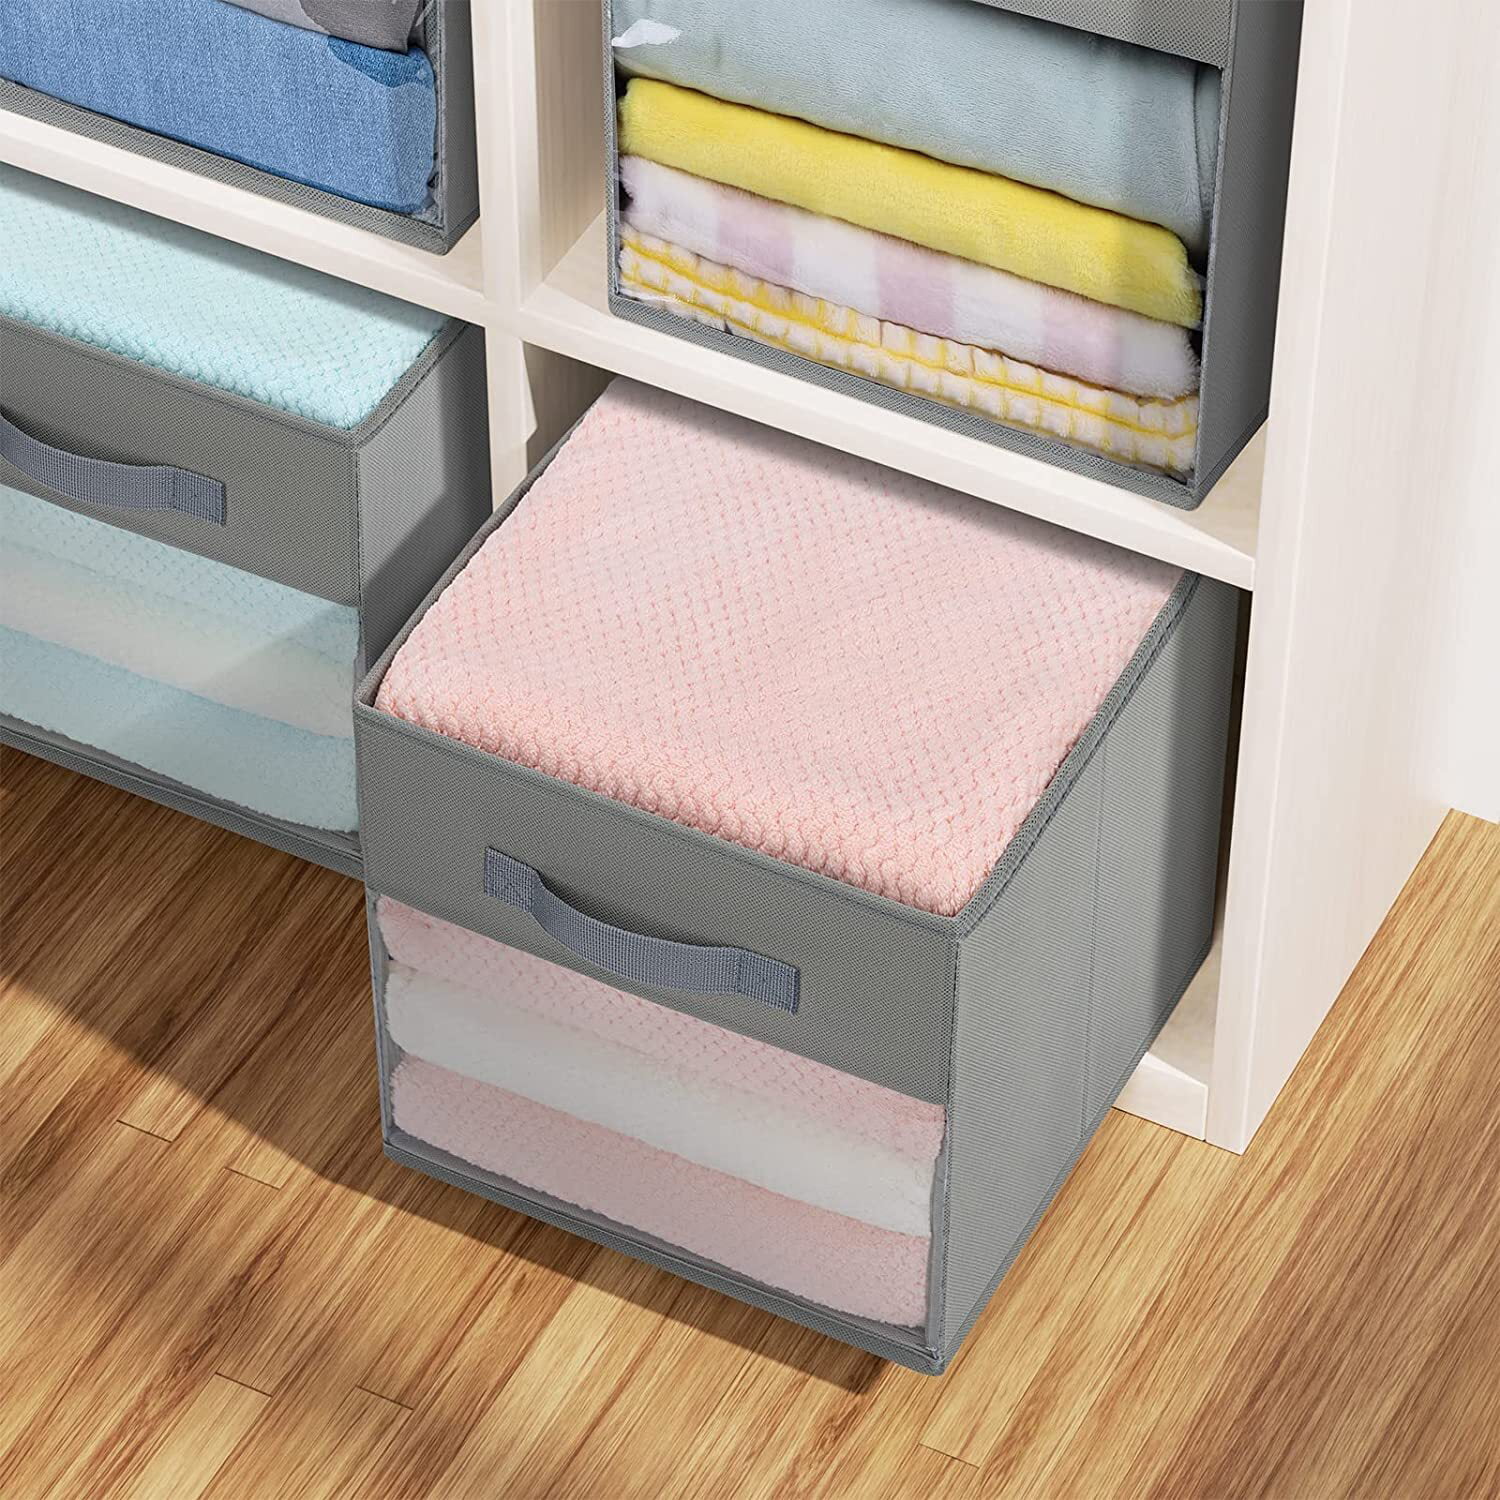 DIMJ Storage Bins, 3 Pcs Large Foldable Fabric Storage Bin Organizer with Clear Window for Bedroom Kids Room Wardrobe Closet Shelves, Home Storage